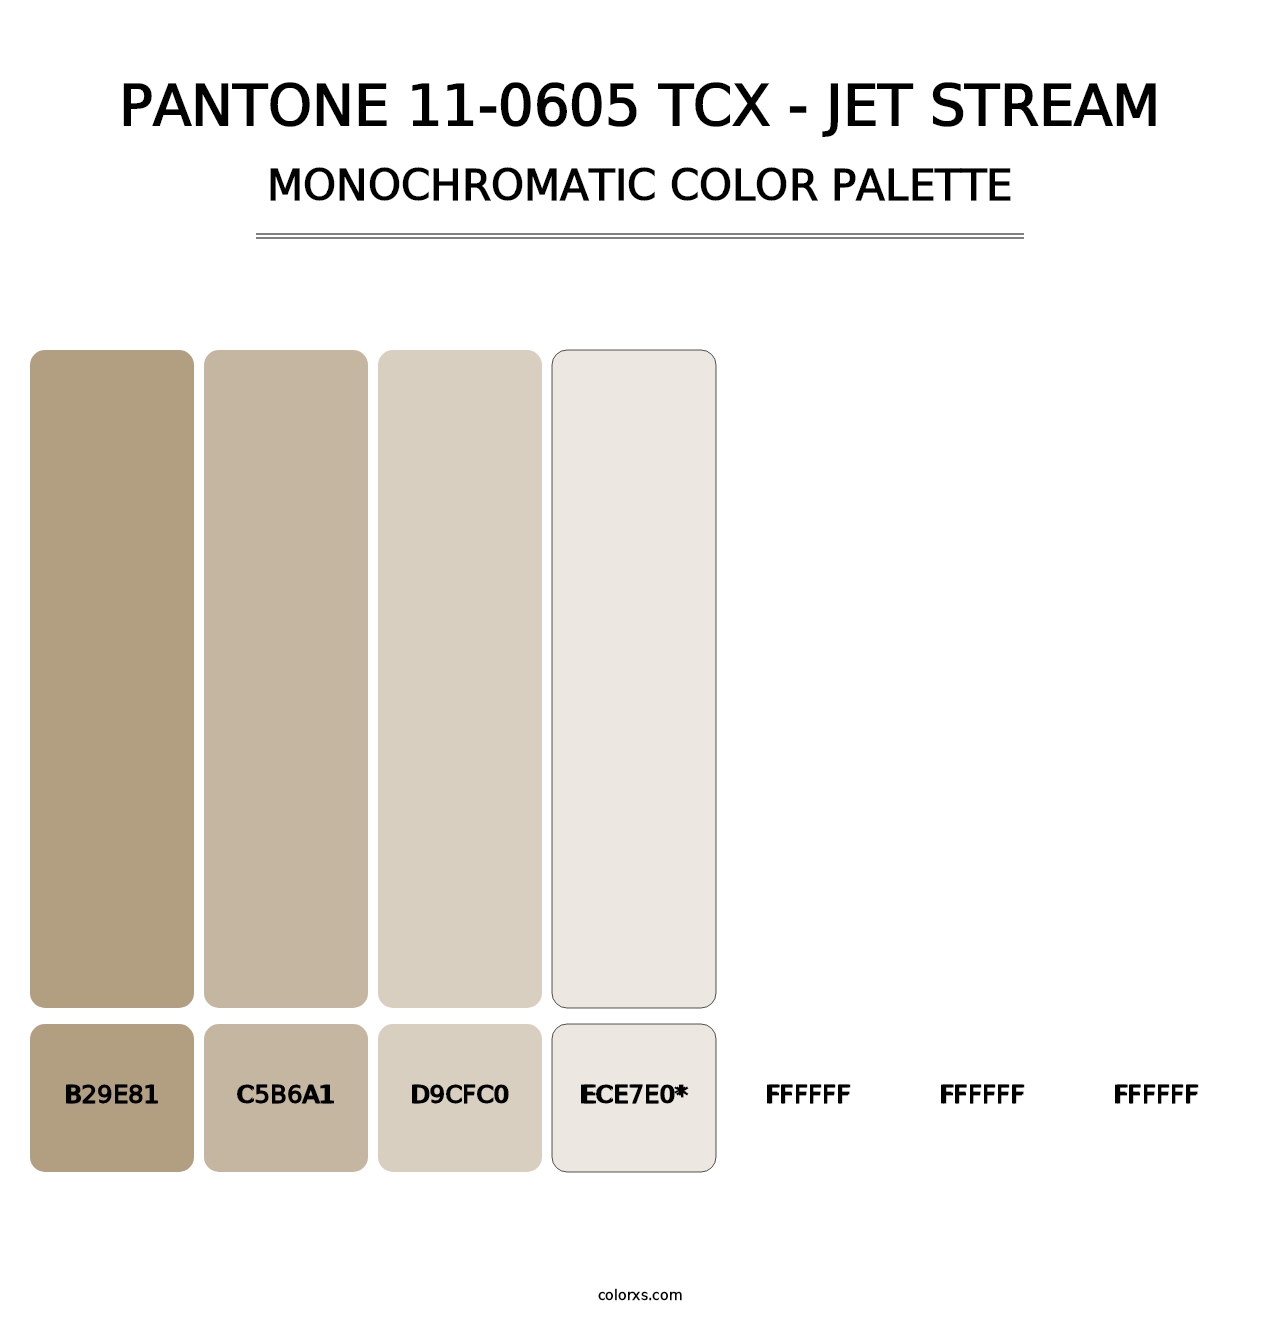 PANTONE 11-0605 TCX - Jet Stream - Monochromatic Color Palette